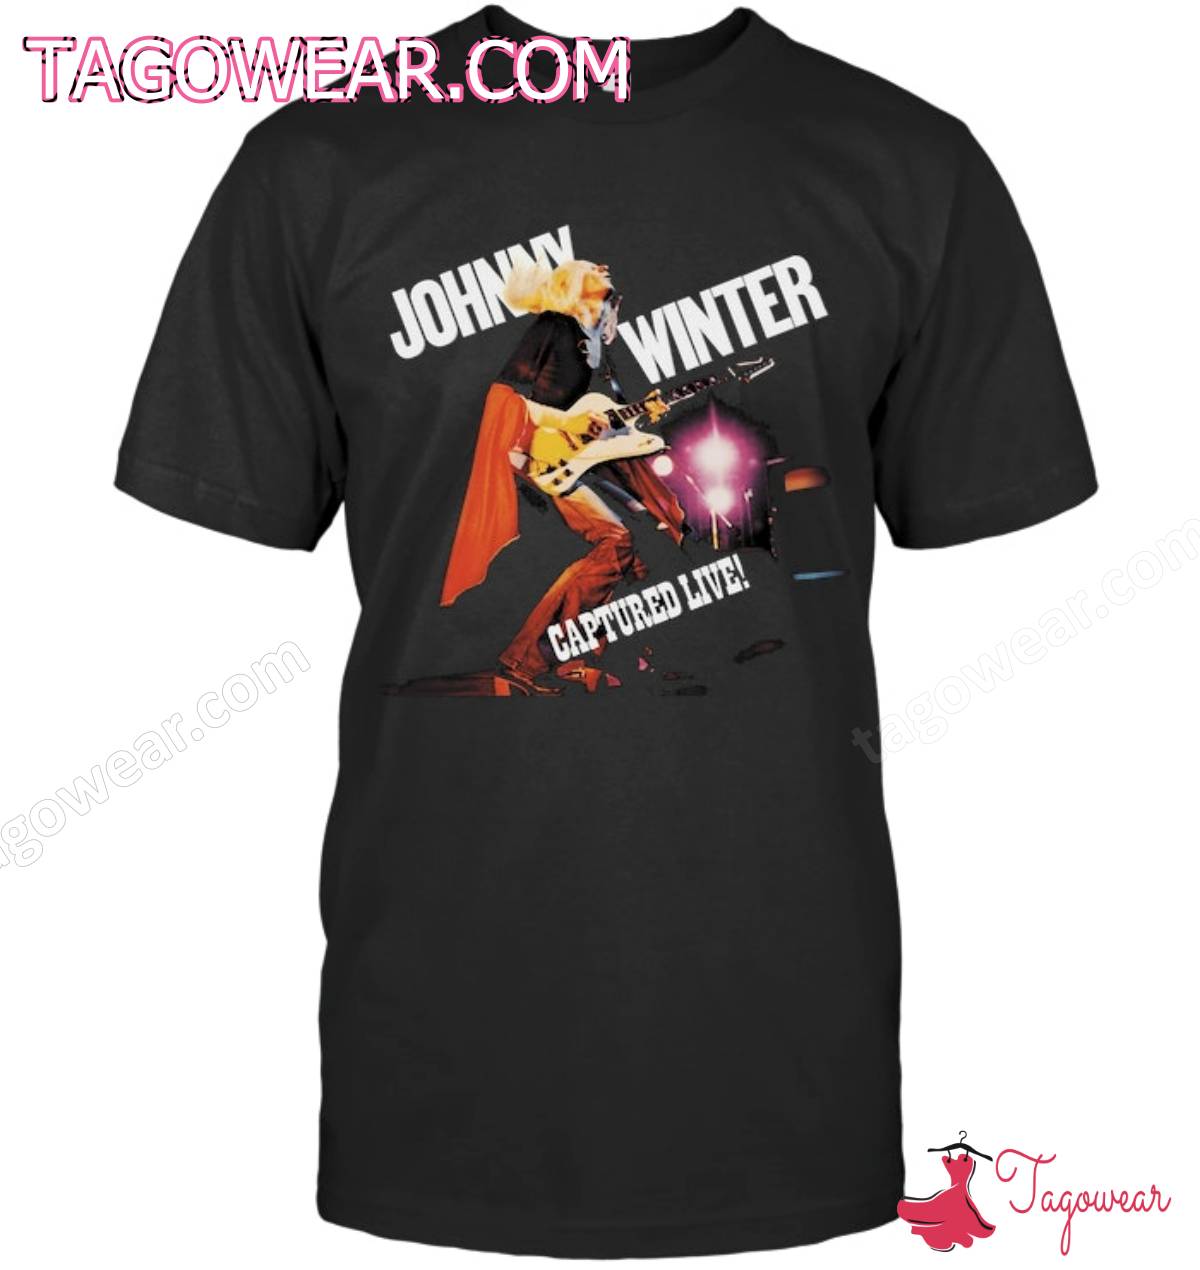 Johnny Winter Captured Live Shirt